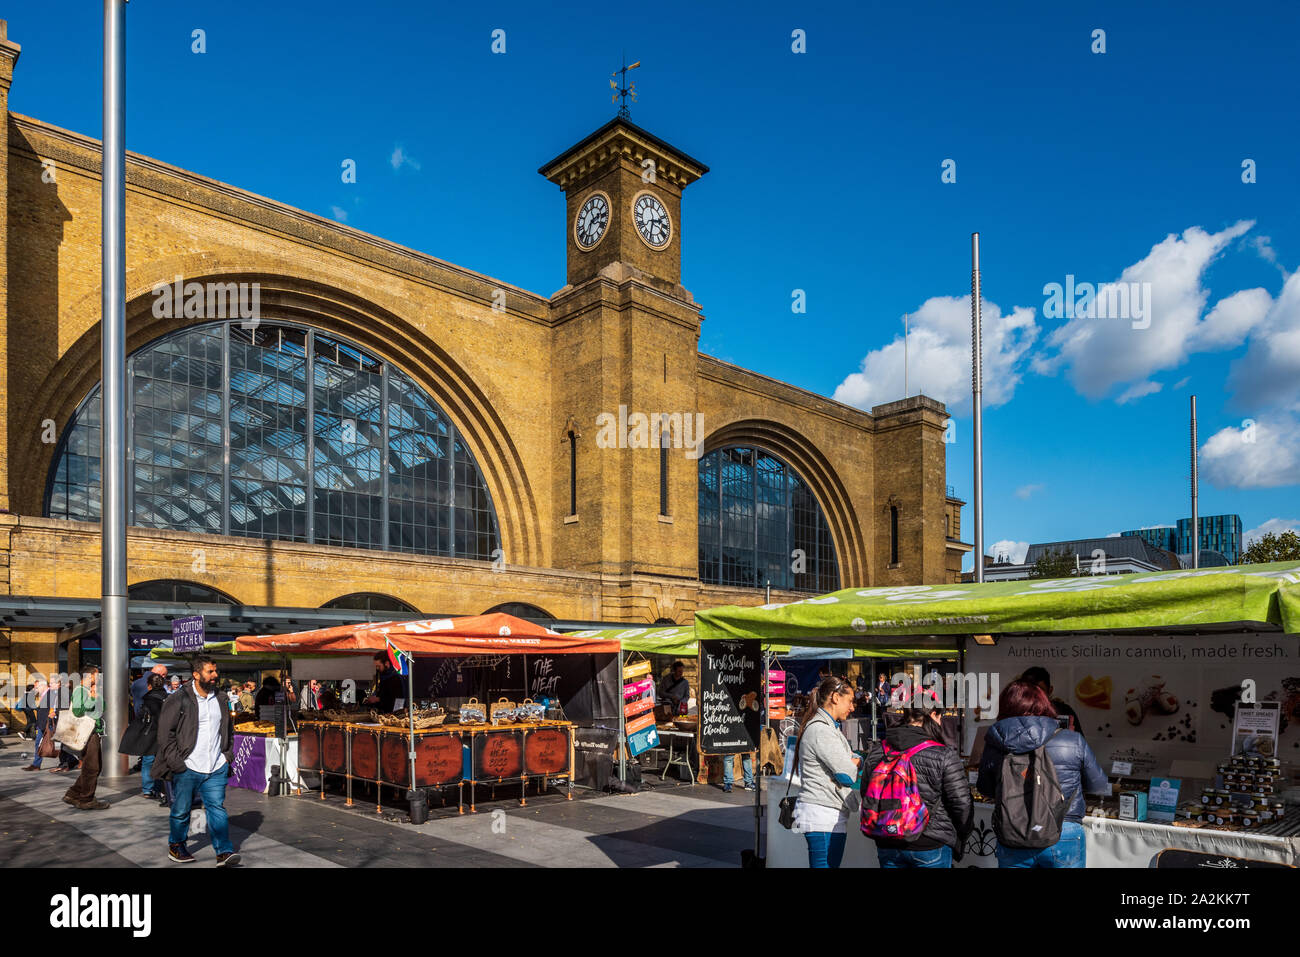 Kings Cross Station London Food Market, die Front der Londoner Kings Cross Station, wurde im Jahr 1852 eröffnet. Lebensmittelstände auf dem Bahnhofsplatz. Stockfoto